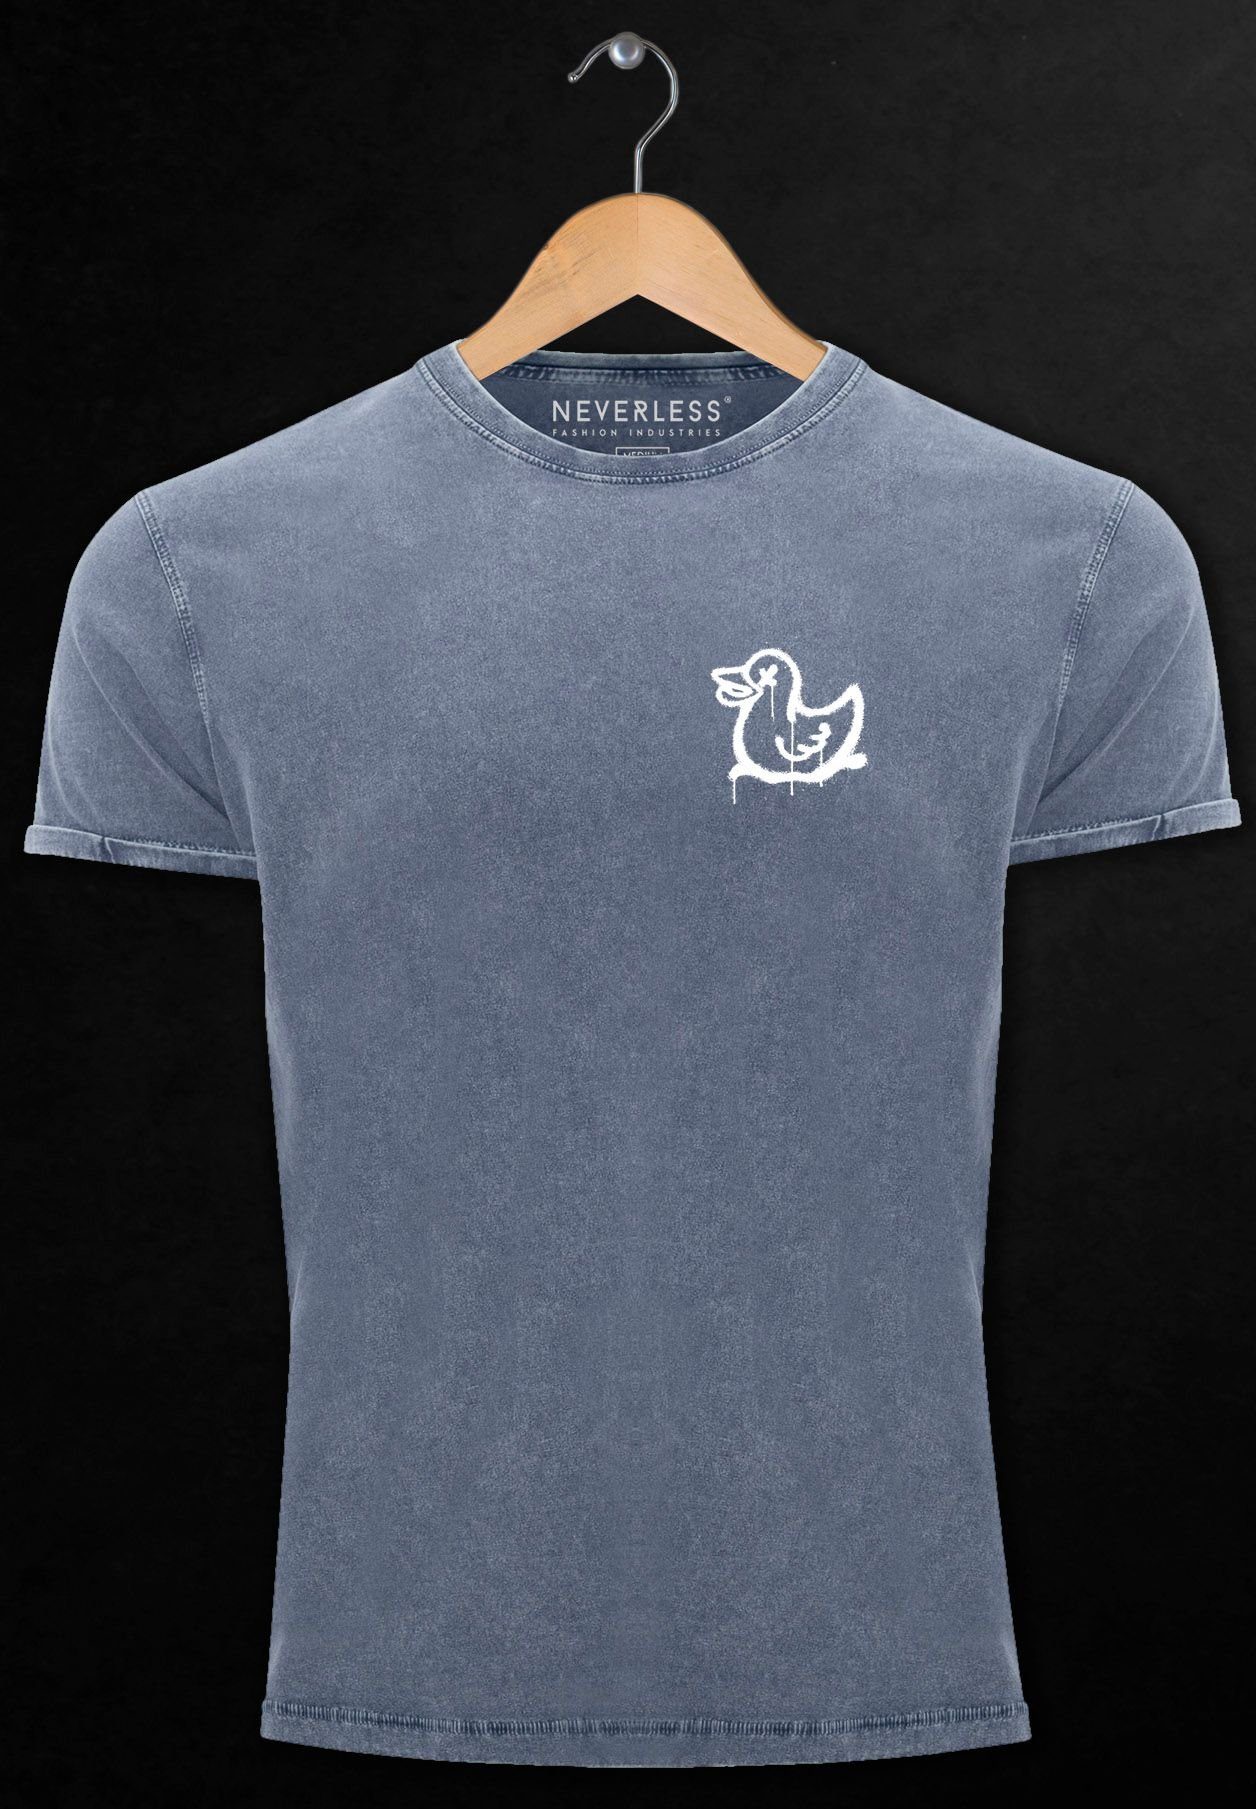 T-Shir Duck Vintage Graffiti Herren Neverless blau Drippy mit Ente Print Print-Shirt Shirt Printshirt Style